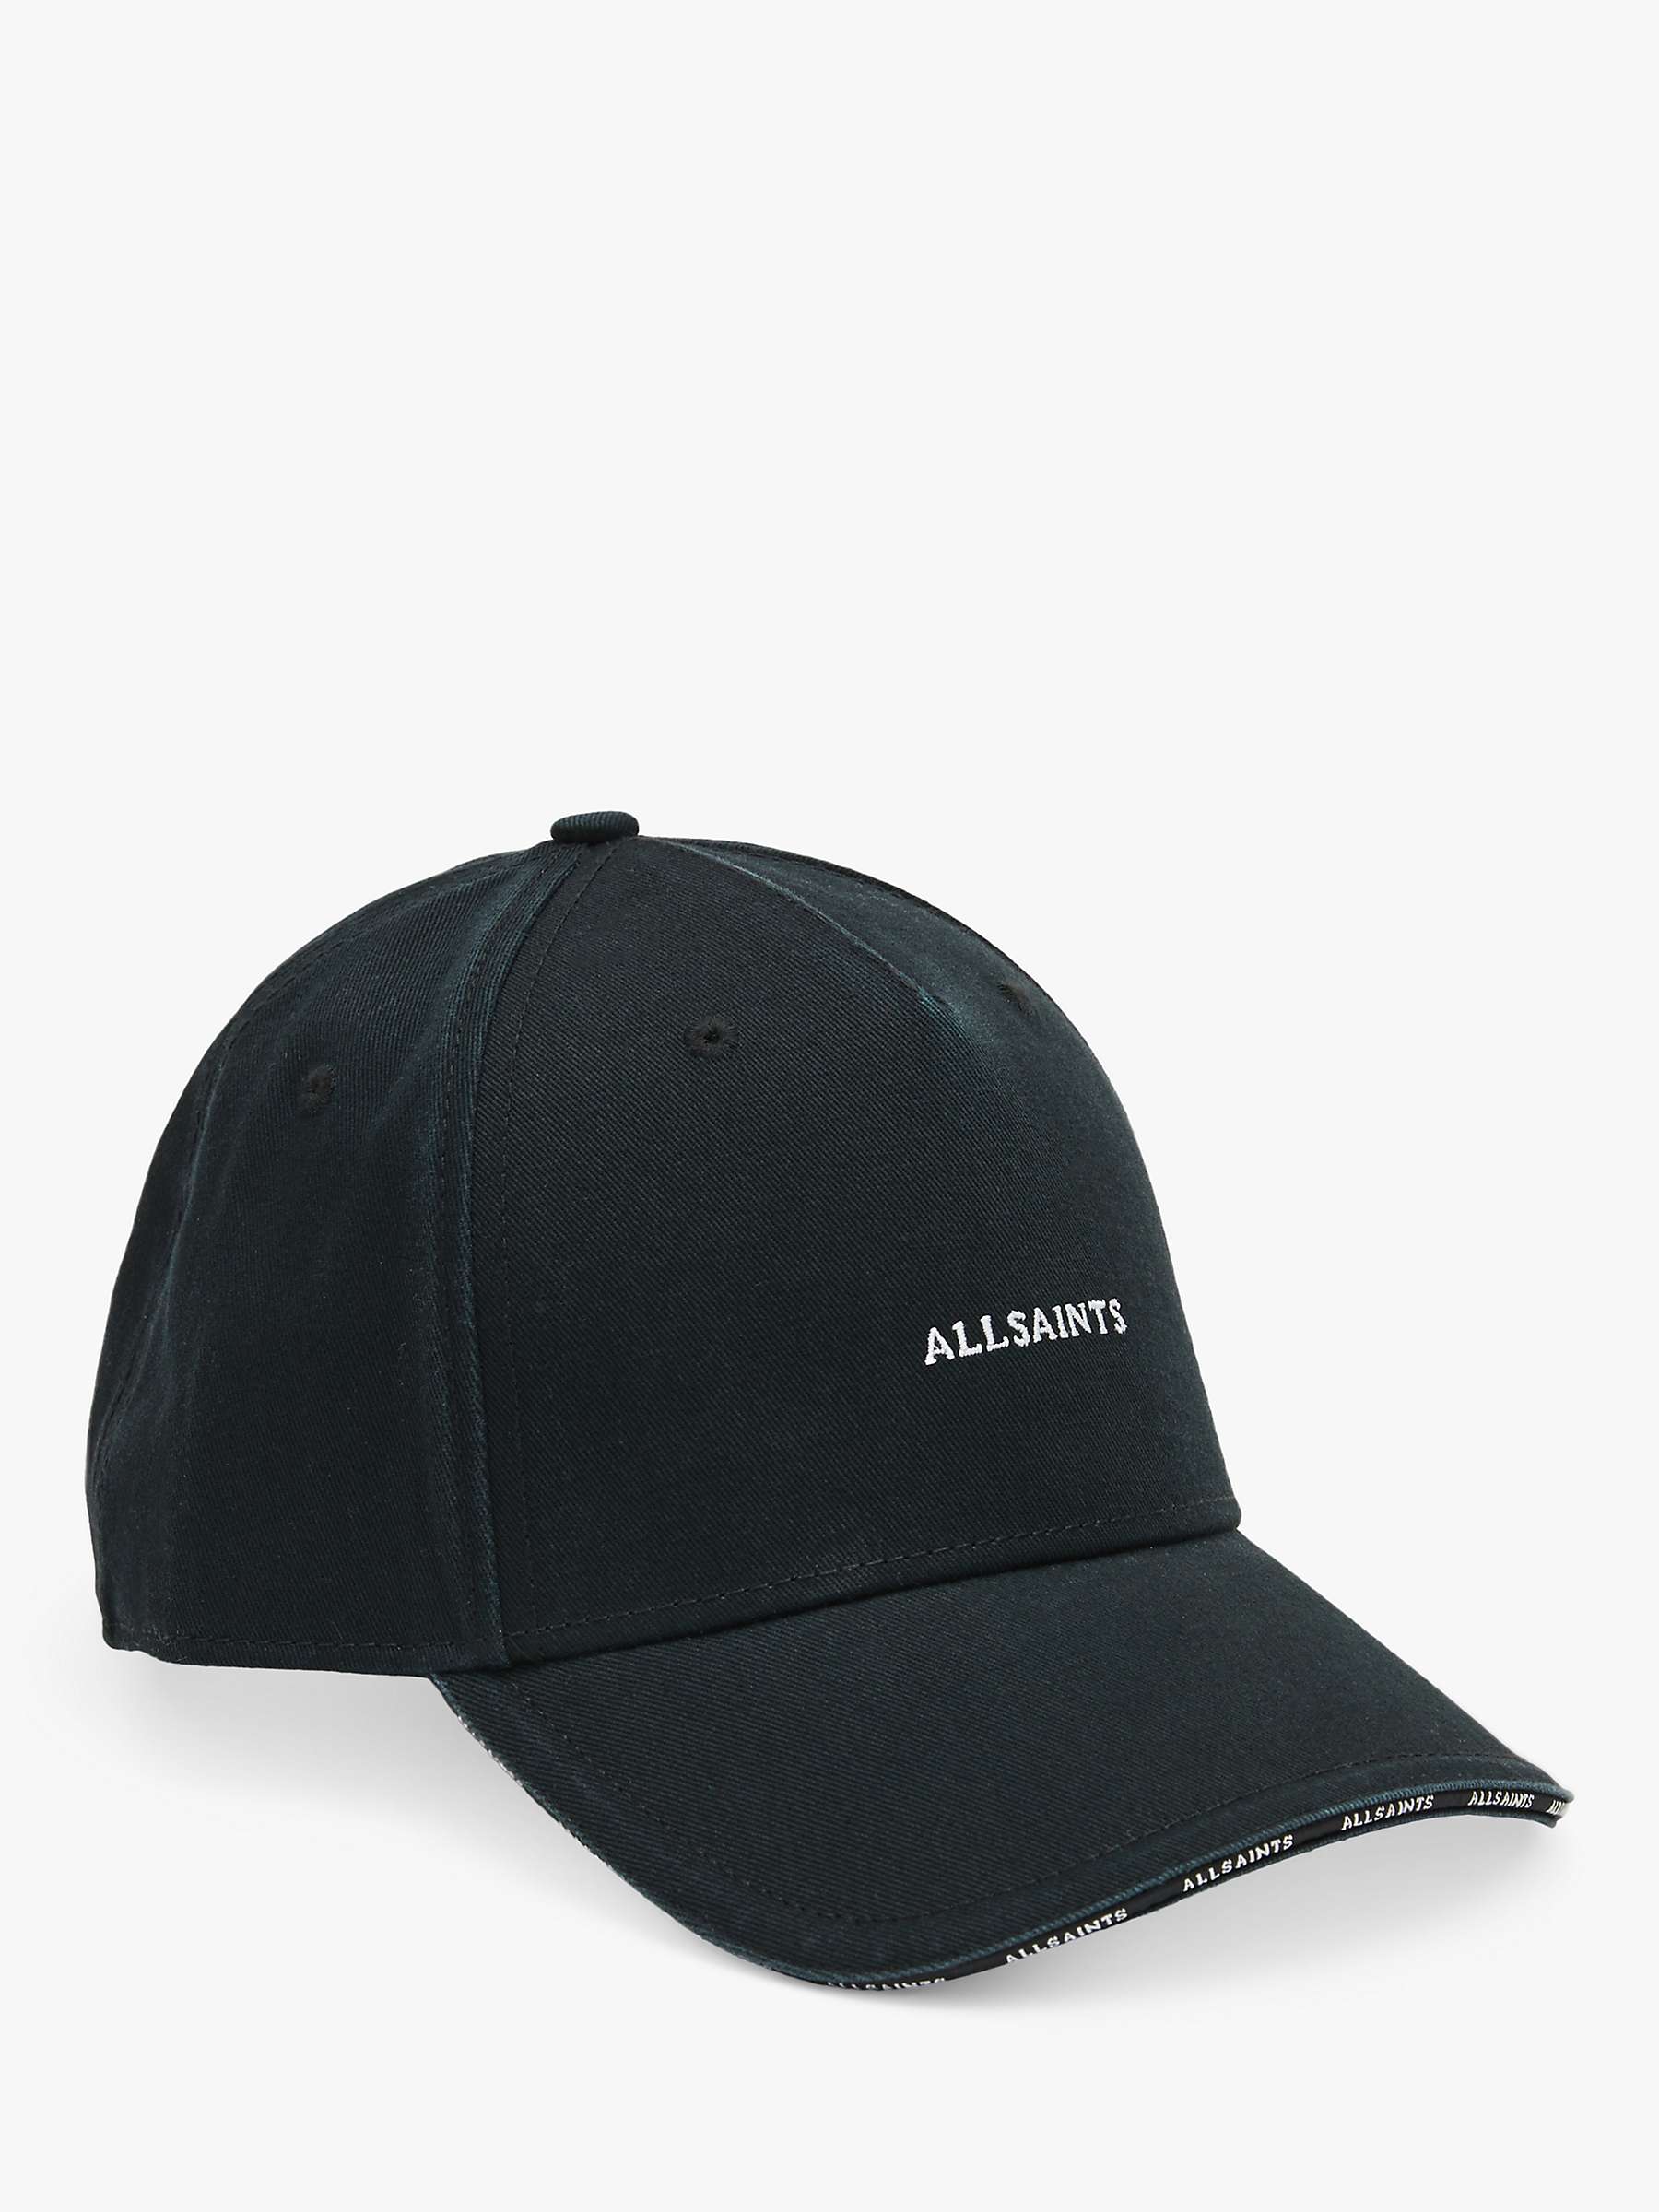 Buy AllSaints Felix Baseball Online at johnlewis.com